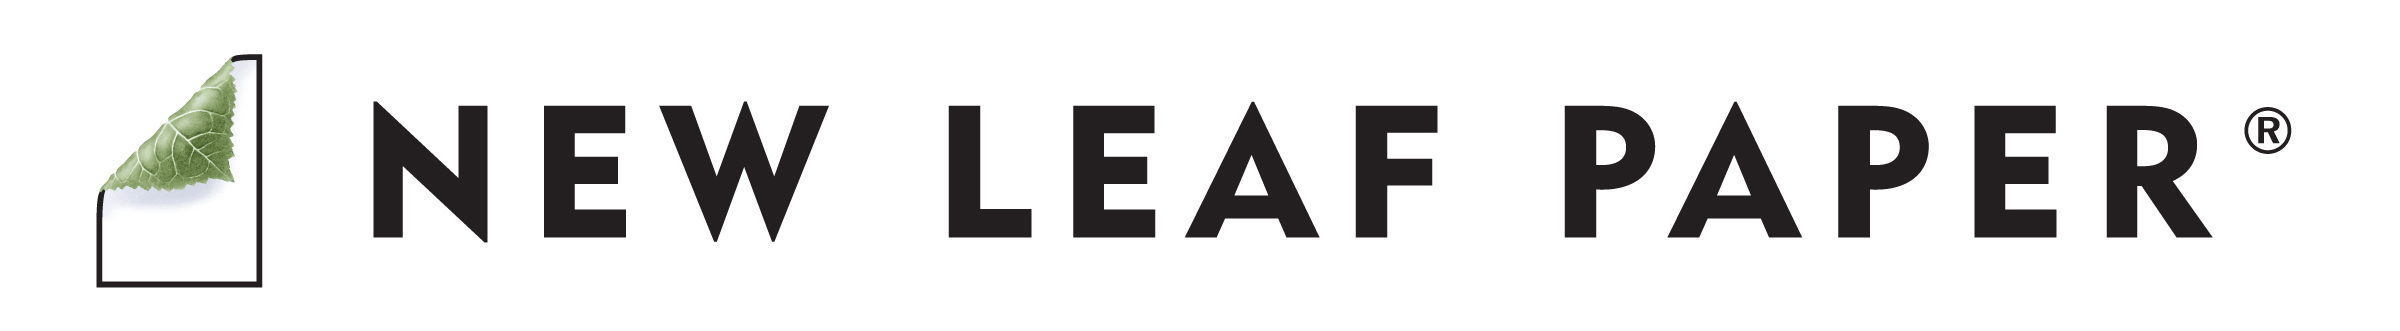 New Leaf Paper logo